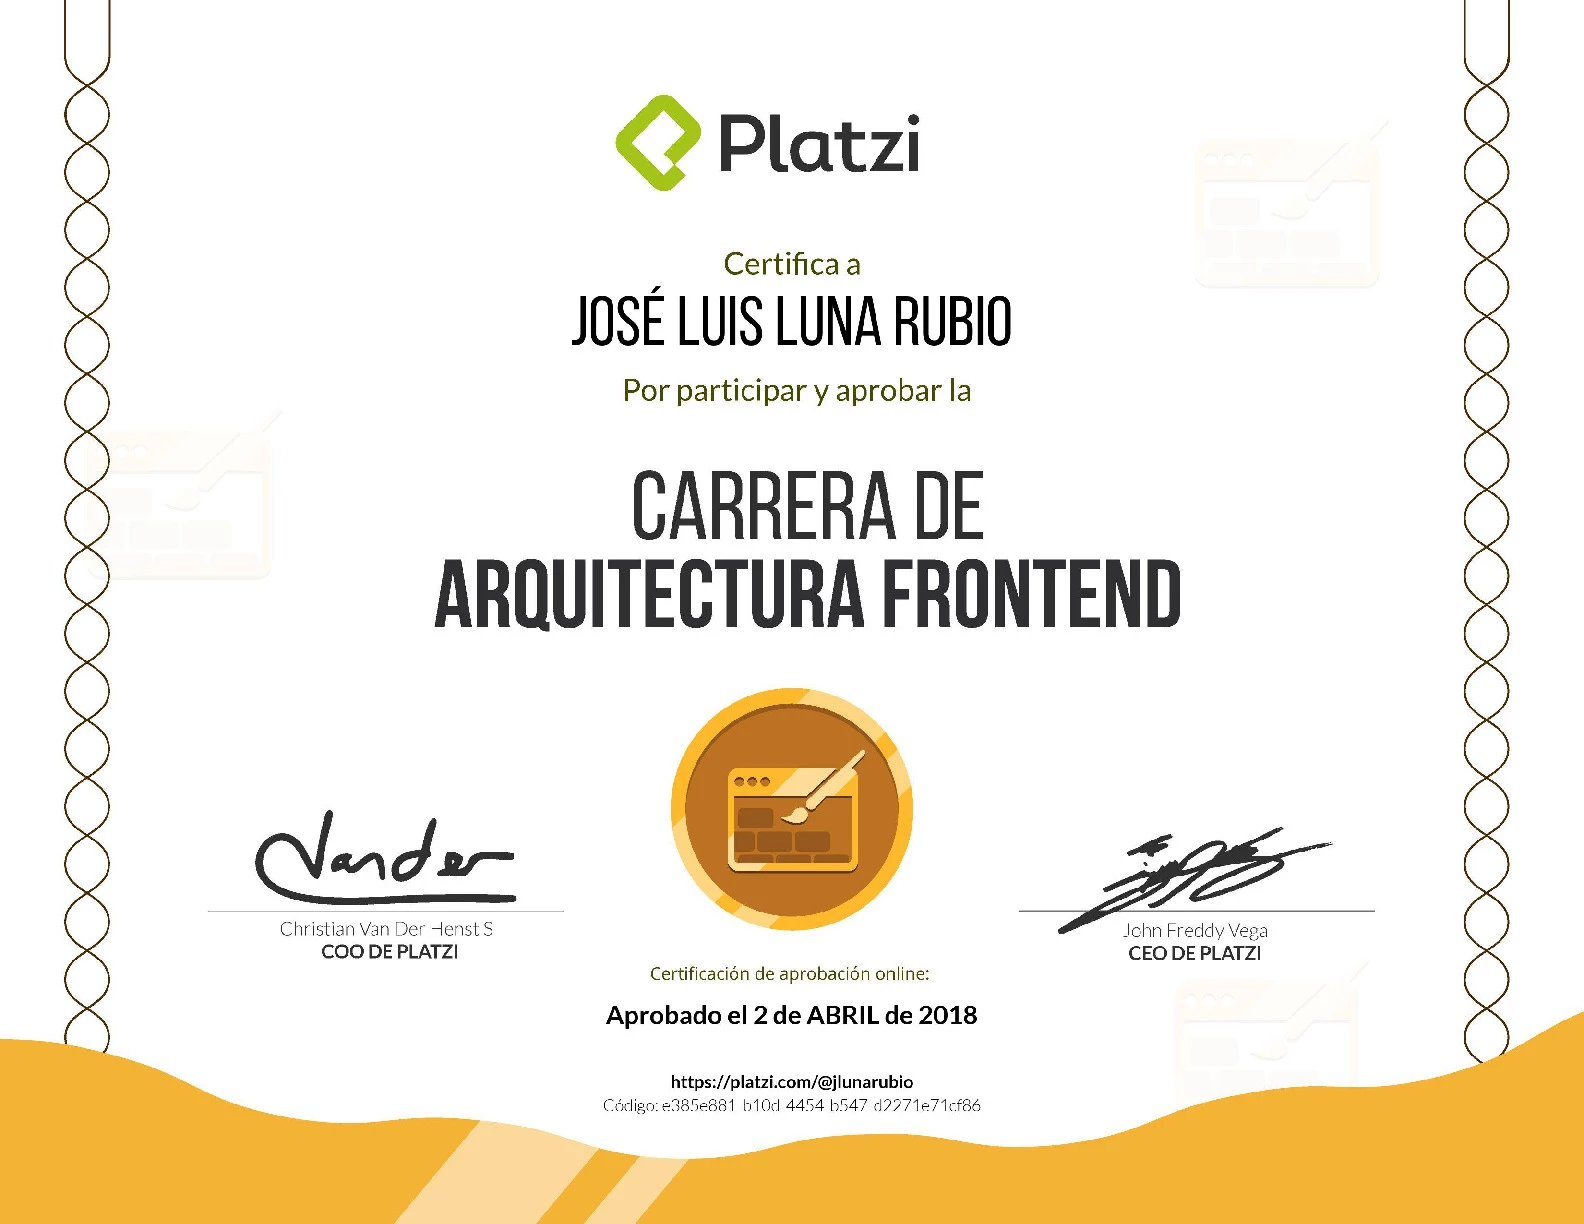 Carrera Platzi Jose Luis Luna Rubio - Arquitectura Frontend